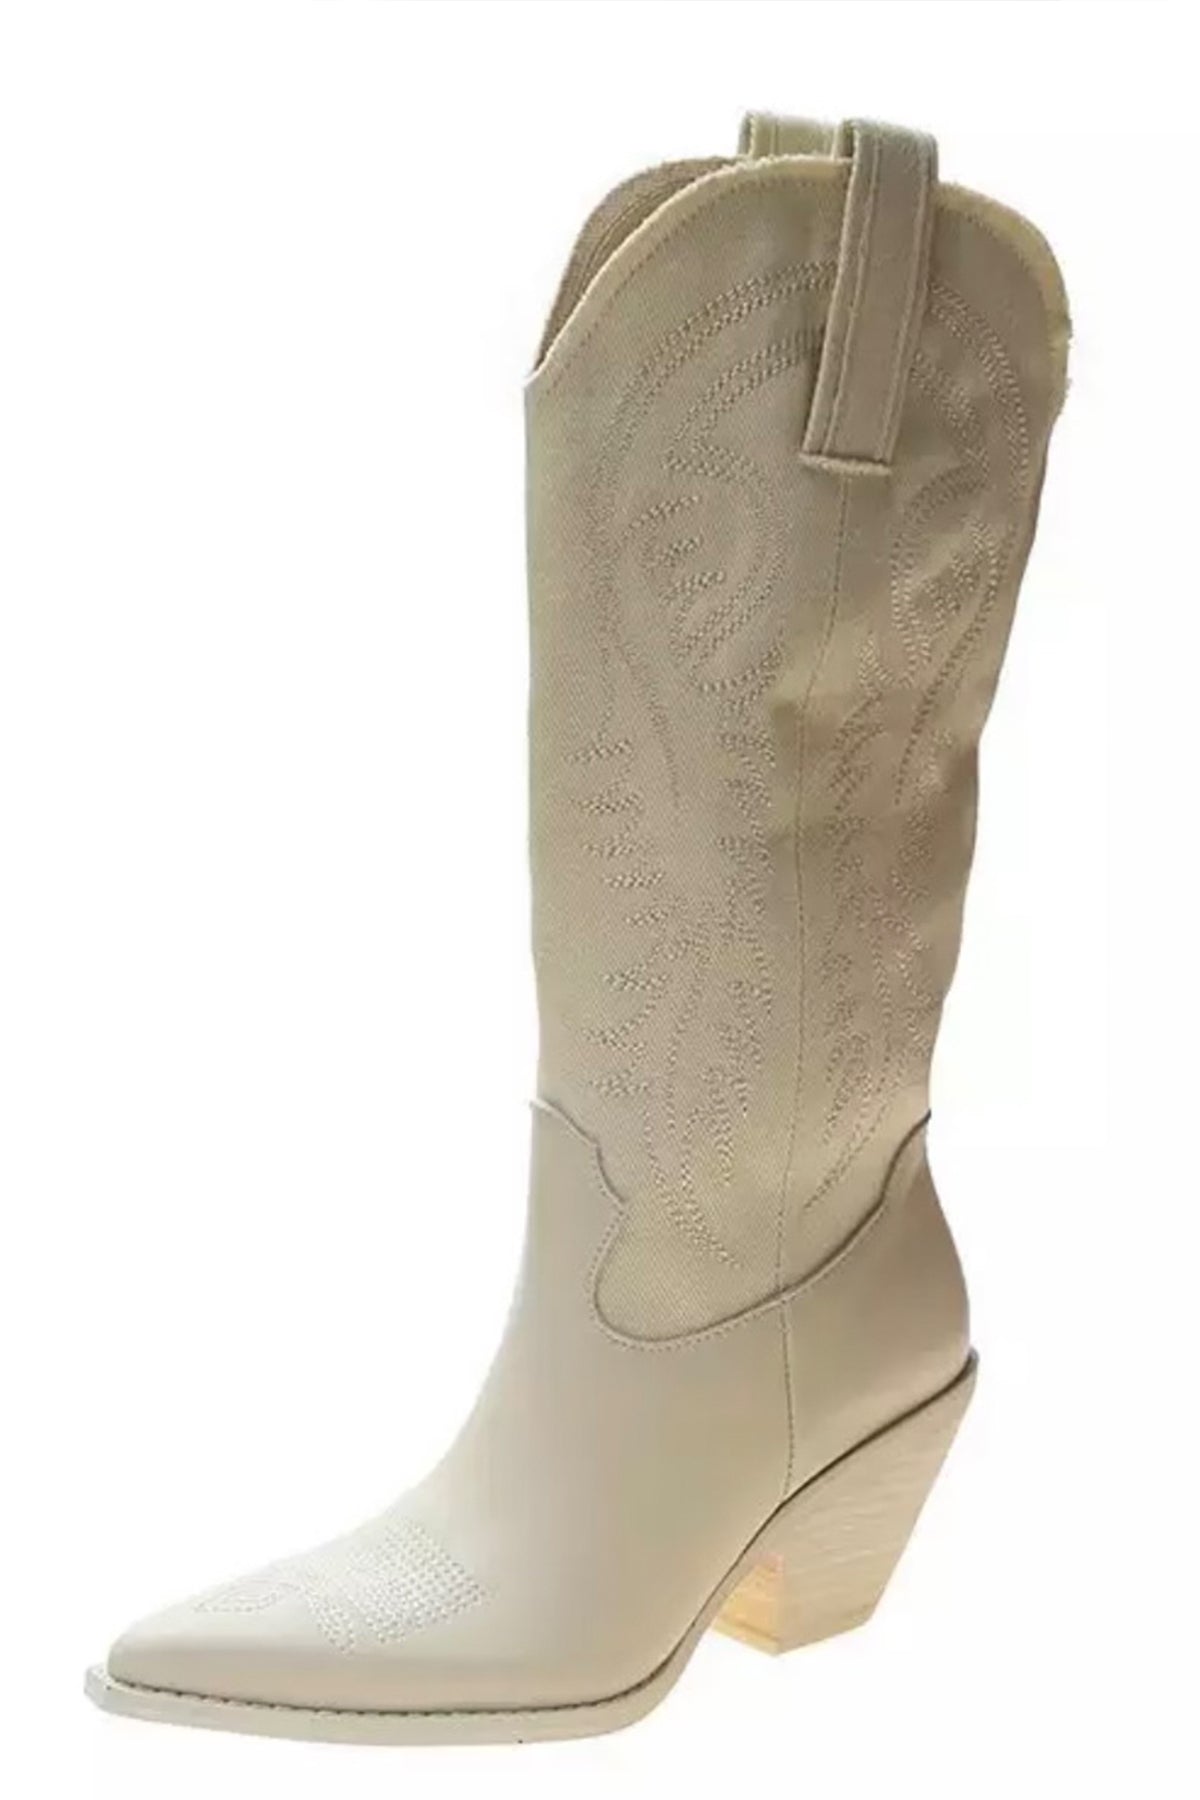 Cowboy western boots cream - agrohort.ipb.ac.id